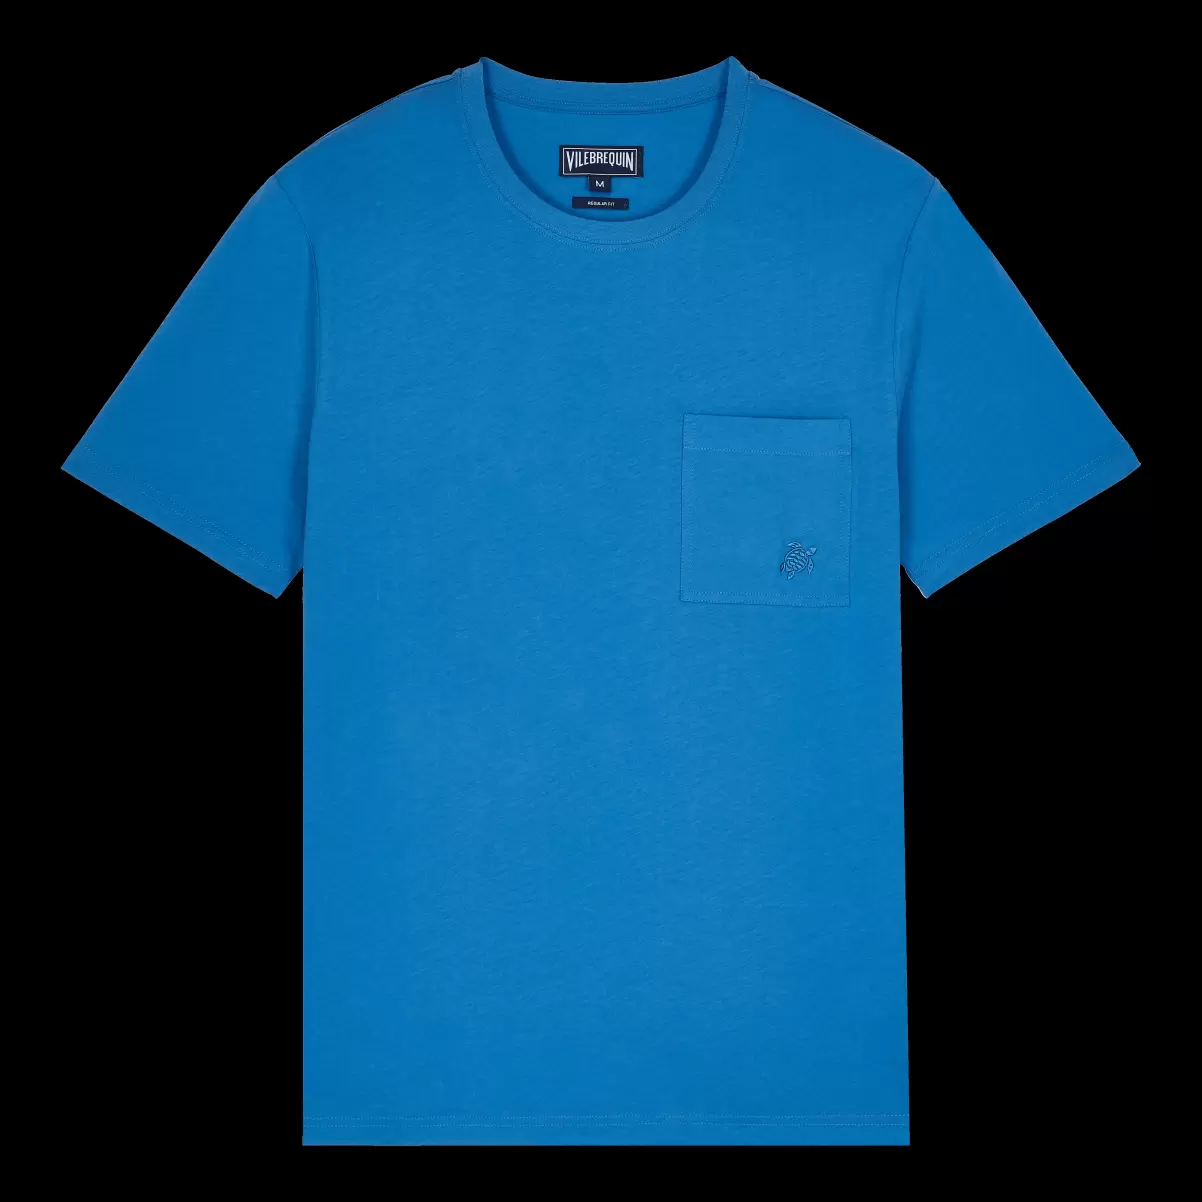 Hombre Autorización Camiseta De Algodón Orgánico De Color Liso Para Hombre Camisetas Vilebrequin Earthenware / Azul - 2